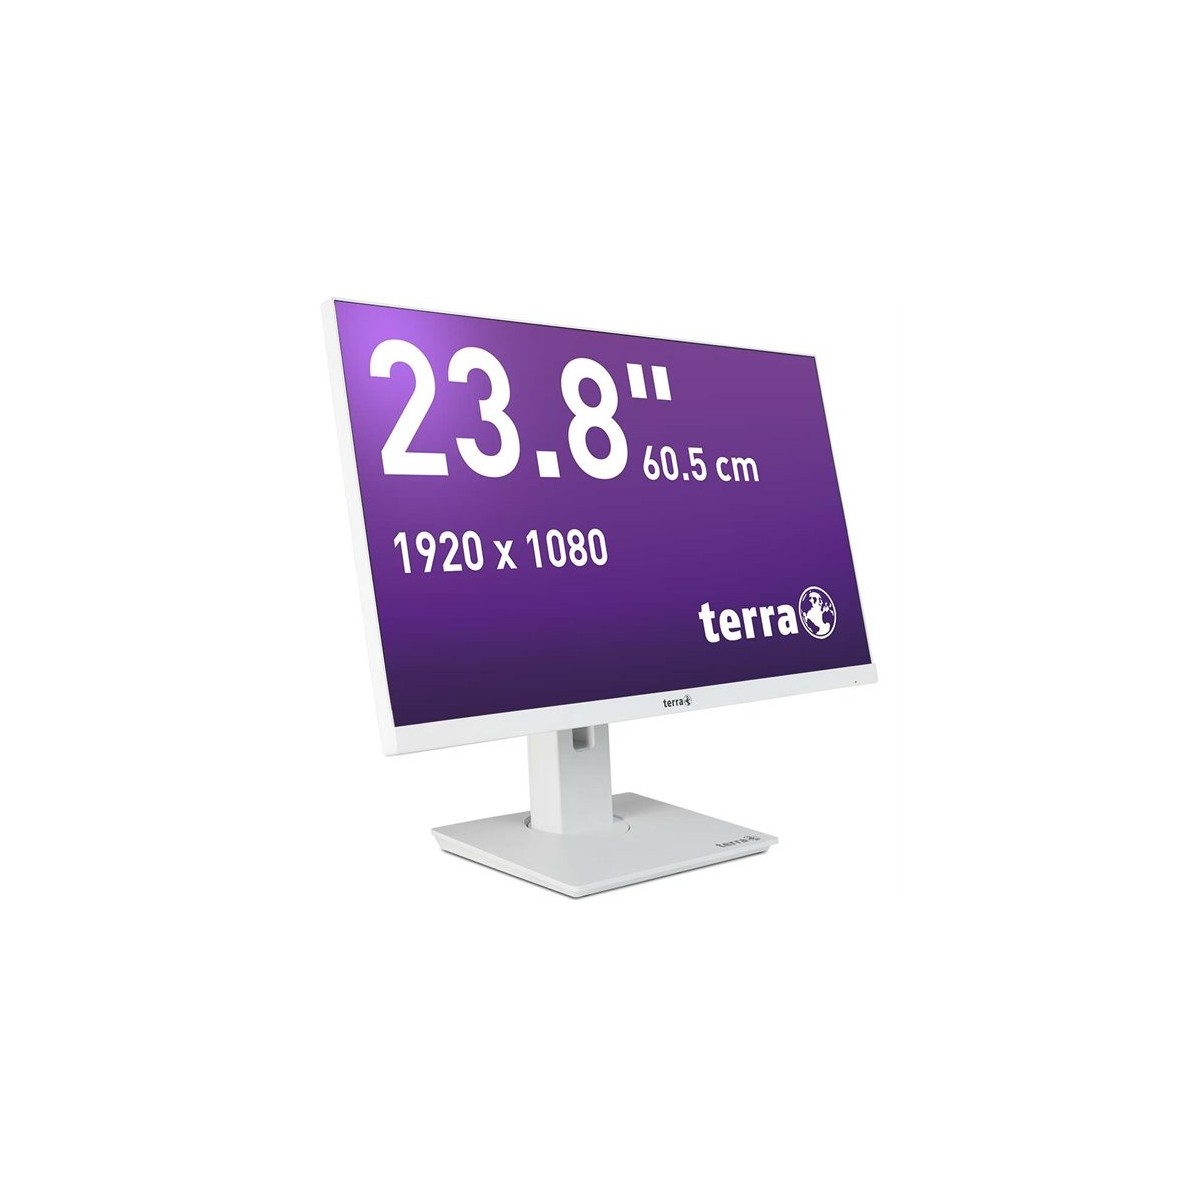 TERRA 2463W - 60.5 cm (23.8") - 1920 x 1080 pixels - Full HD - LED - 5 ms - White